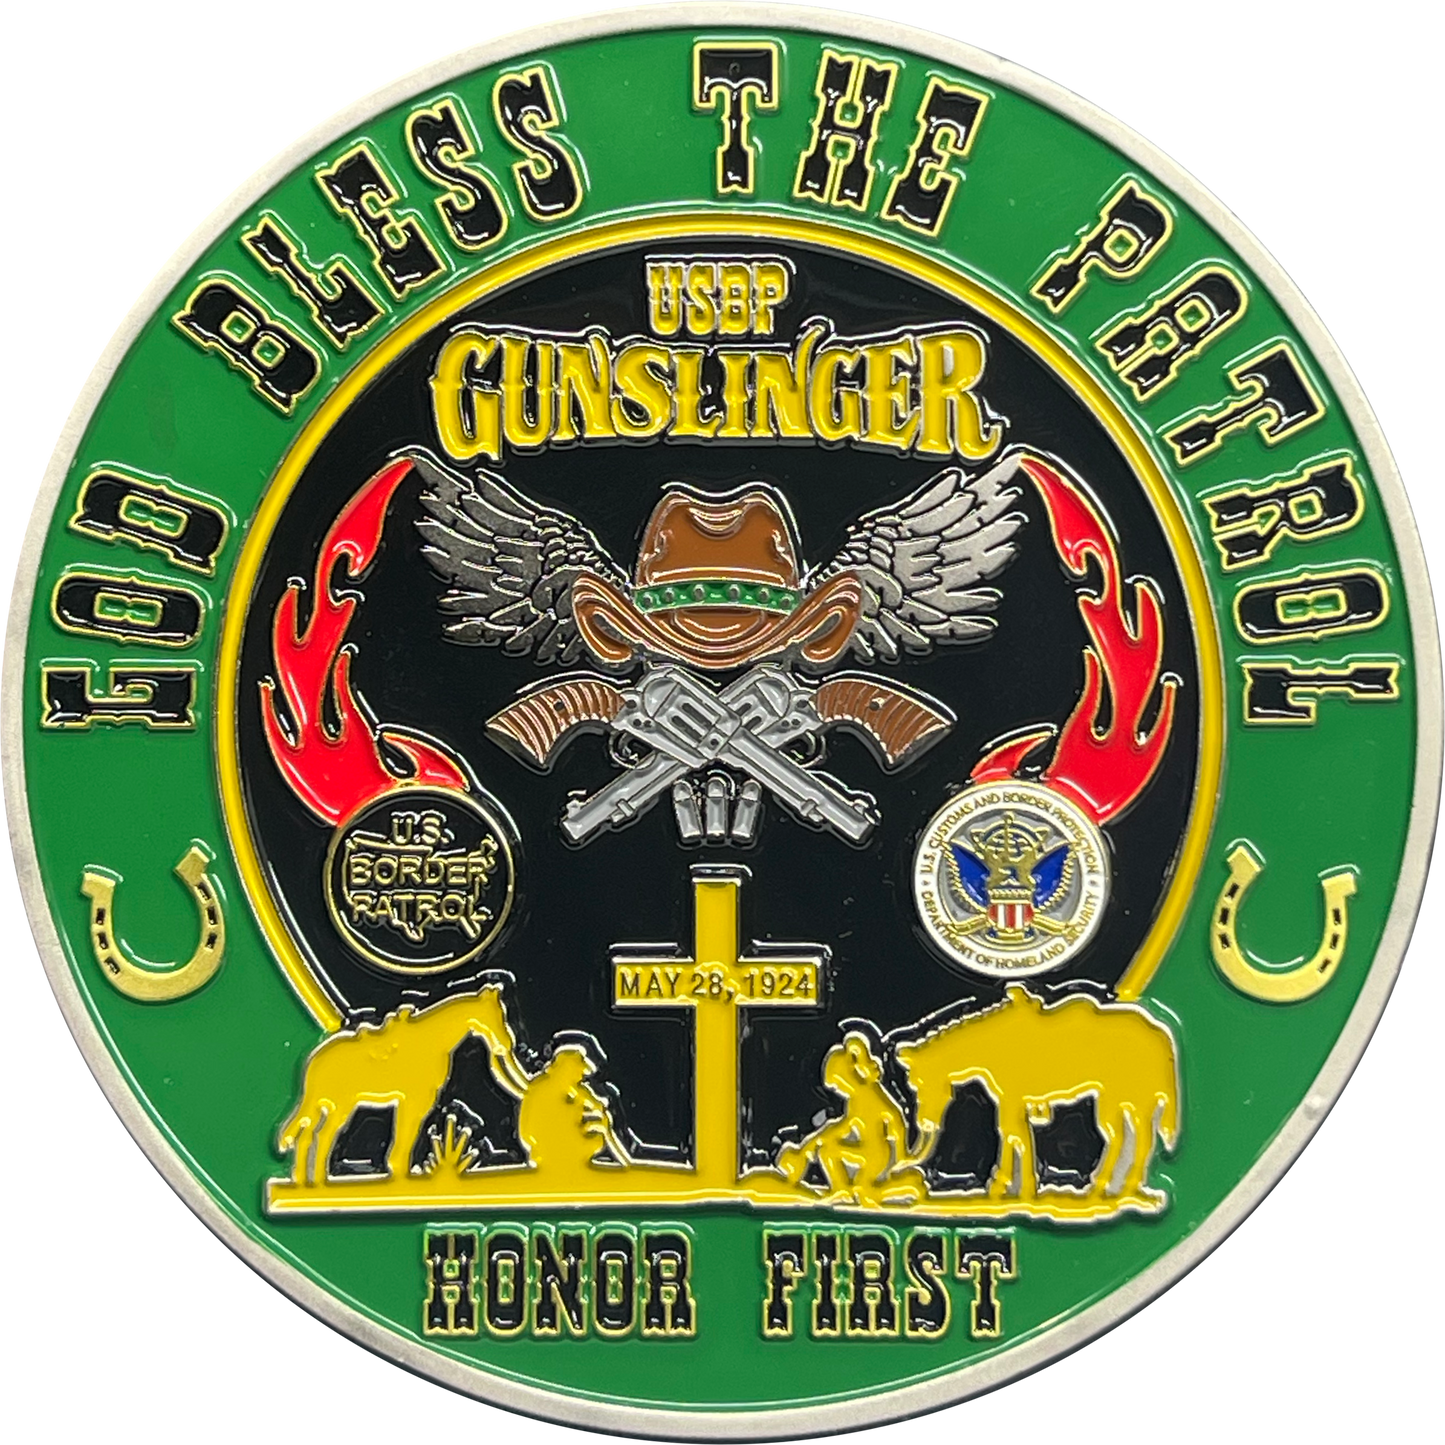 BL16-008 CBP Border Patrol Agent God's Work Gun Slinger Honor First Challenge Coin Horse Patrol